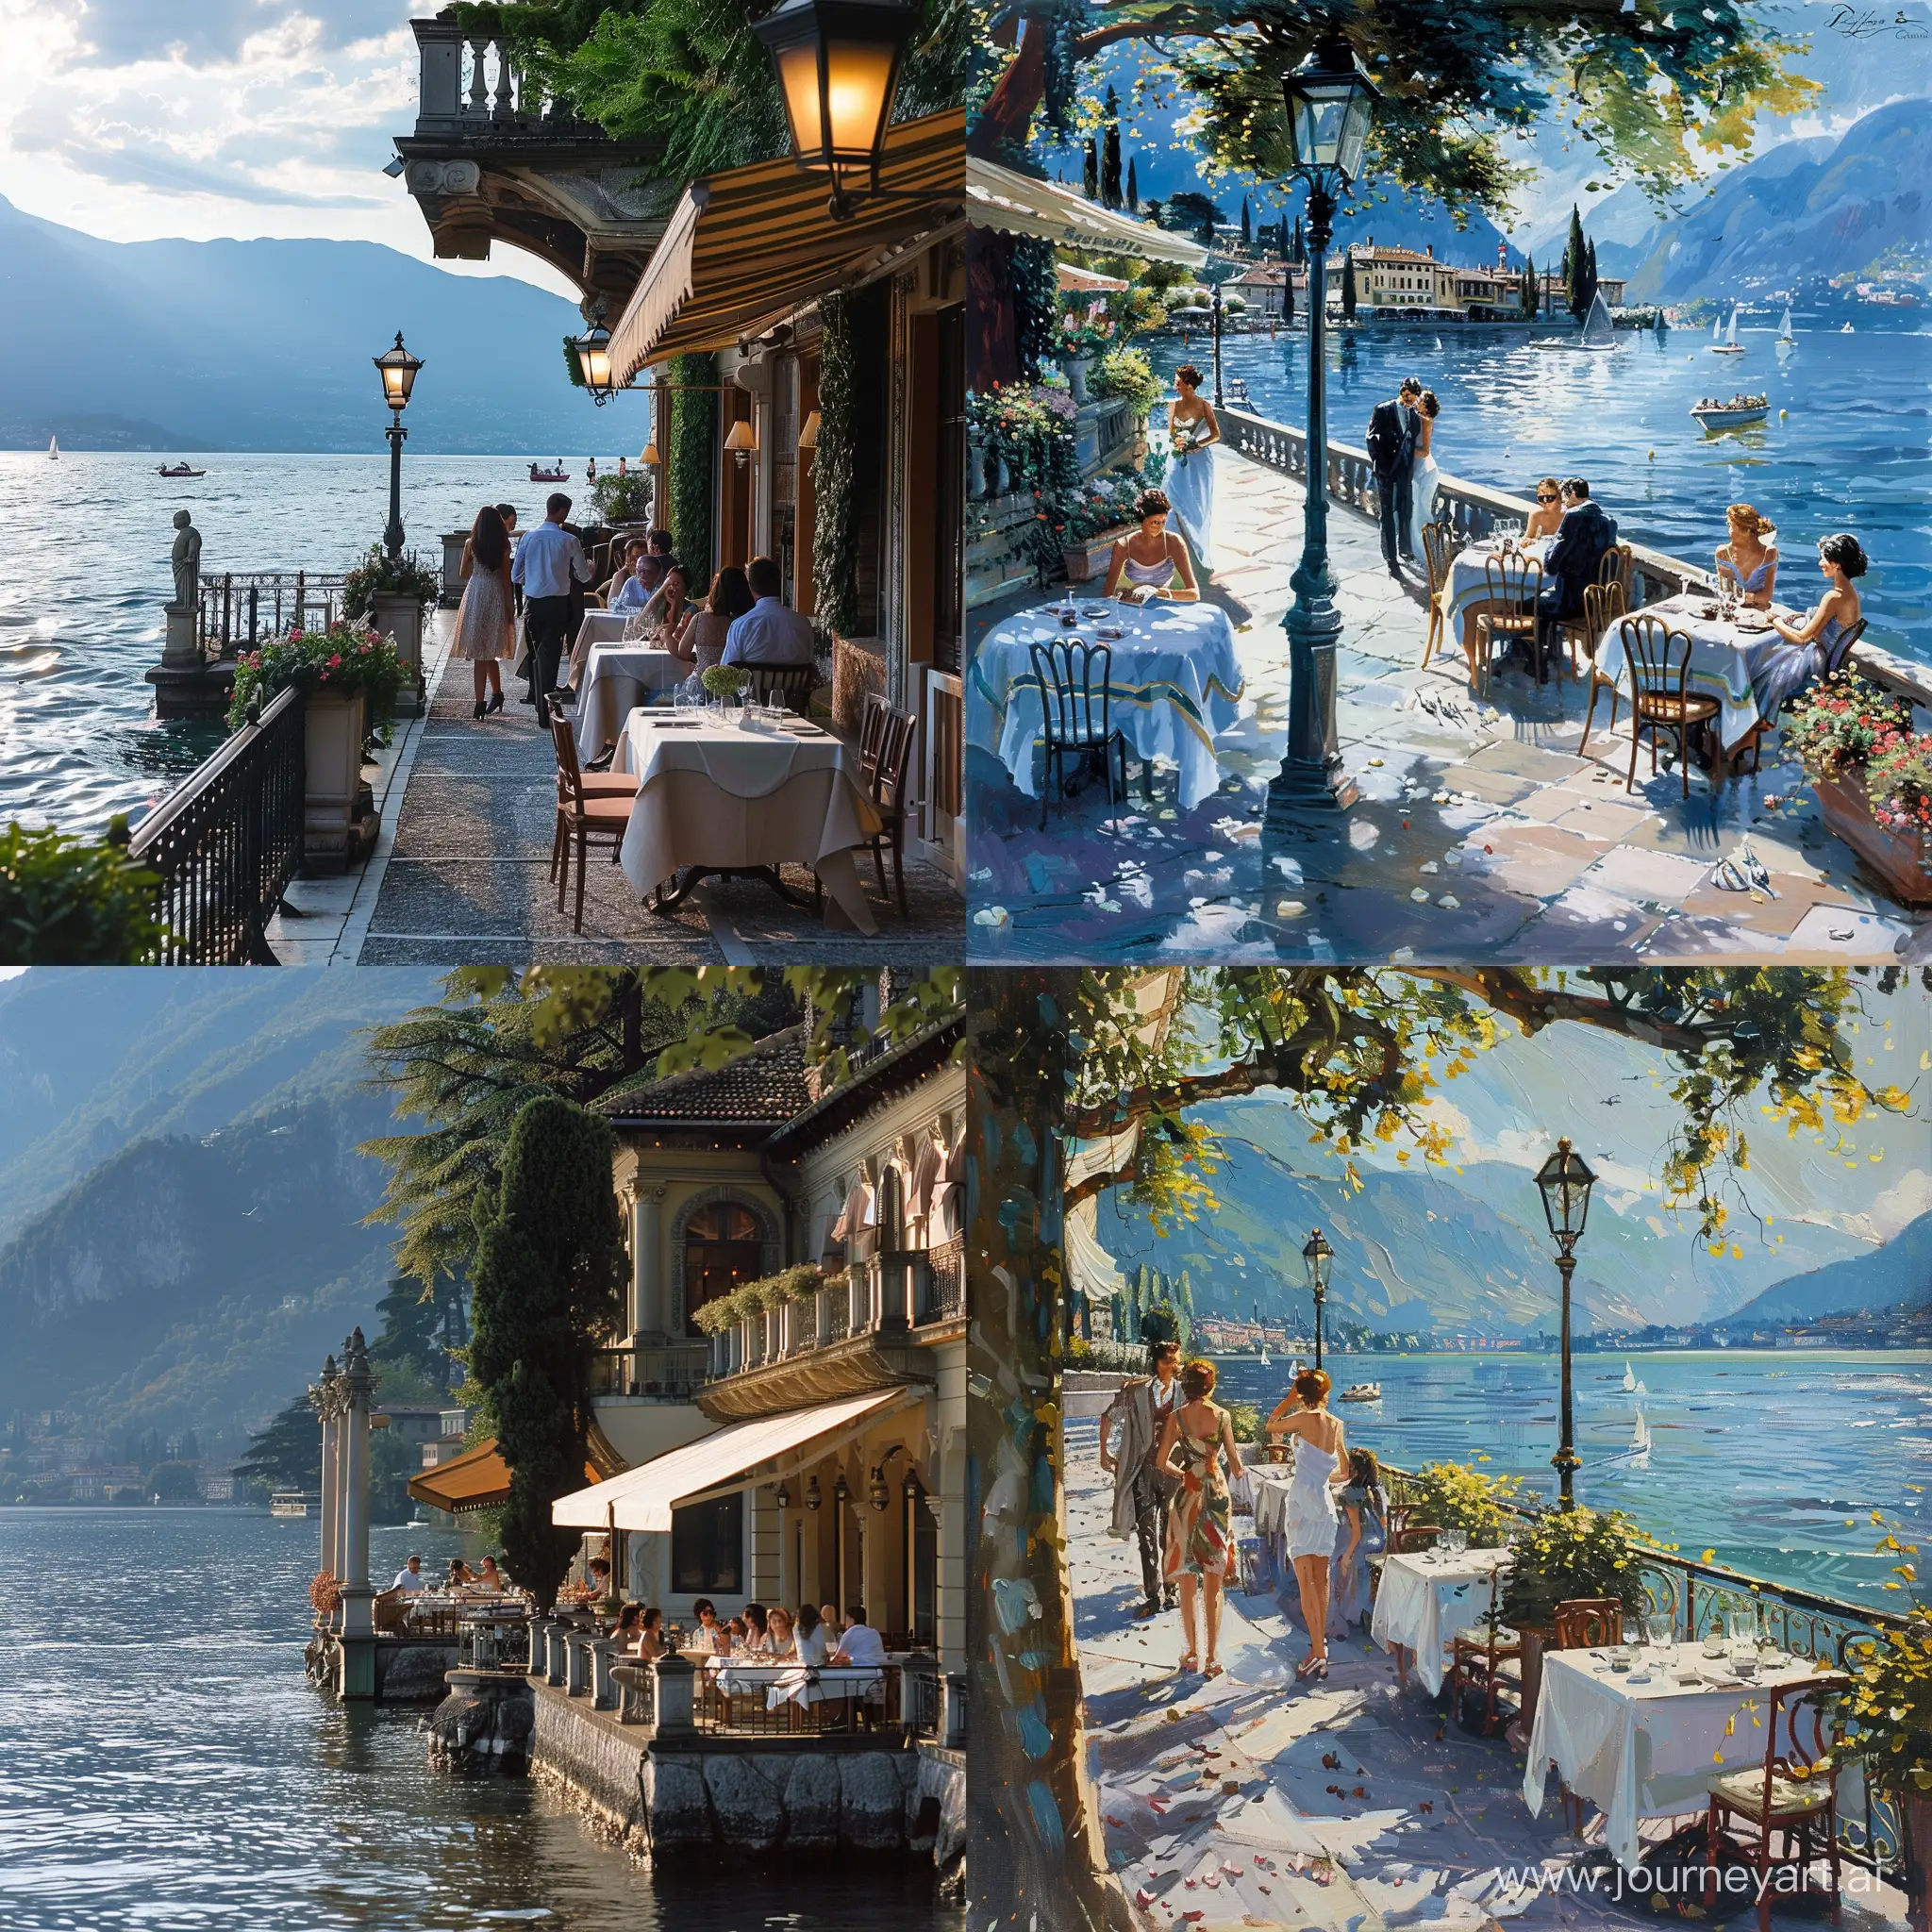 Romantic-Lakeside-Dining-Couples-Enjoying-Luxurious-Restaurant-Ambiance